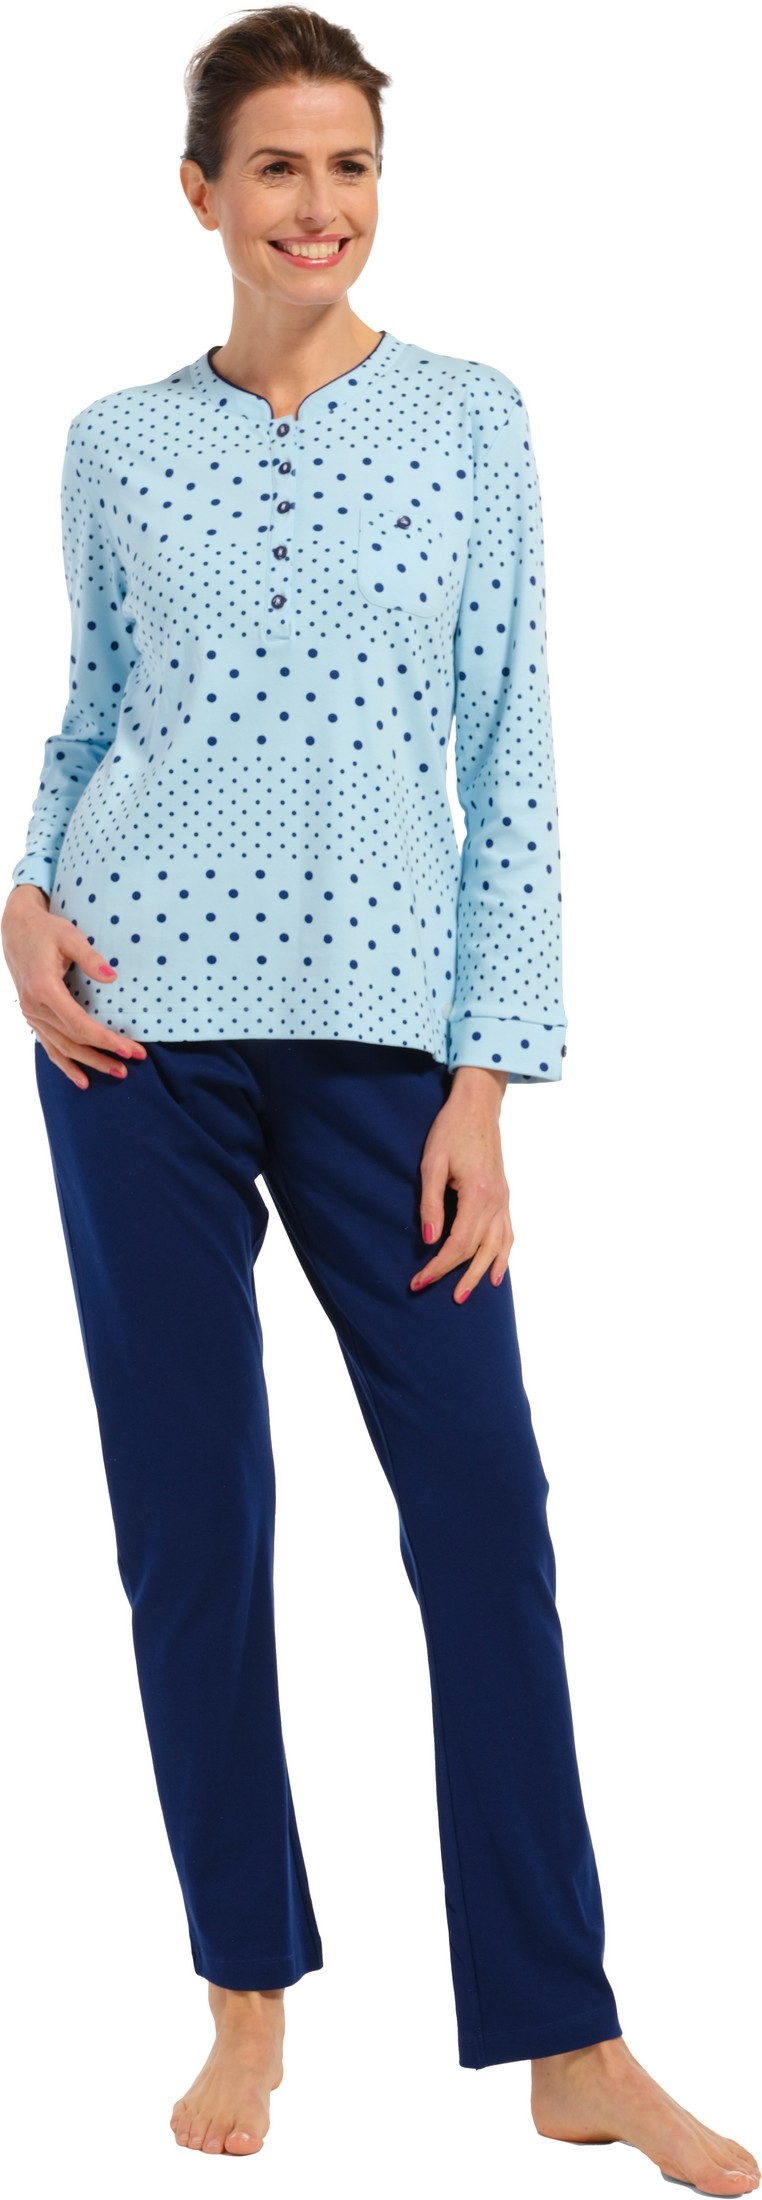 Pastunette dames pyjama 20232-162-4 - Blauw - 50